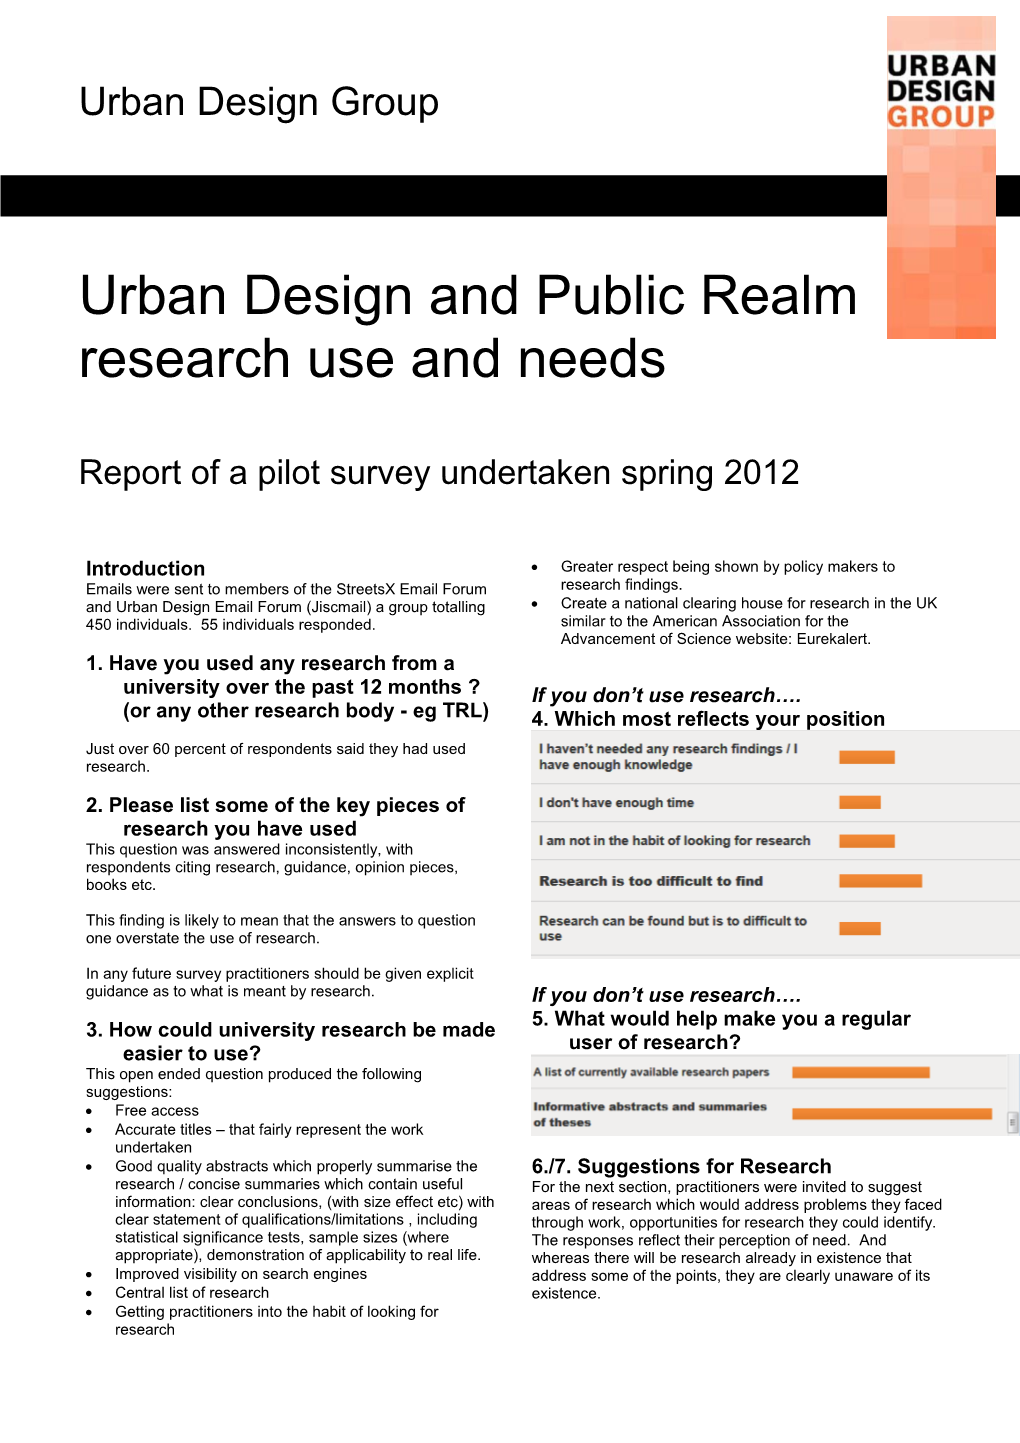 Urban Design Education Summit 2011 - Birmingham